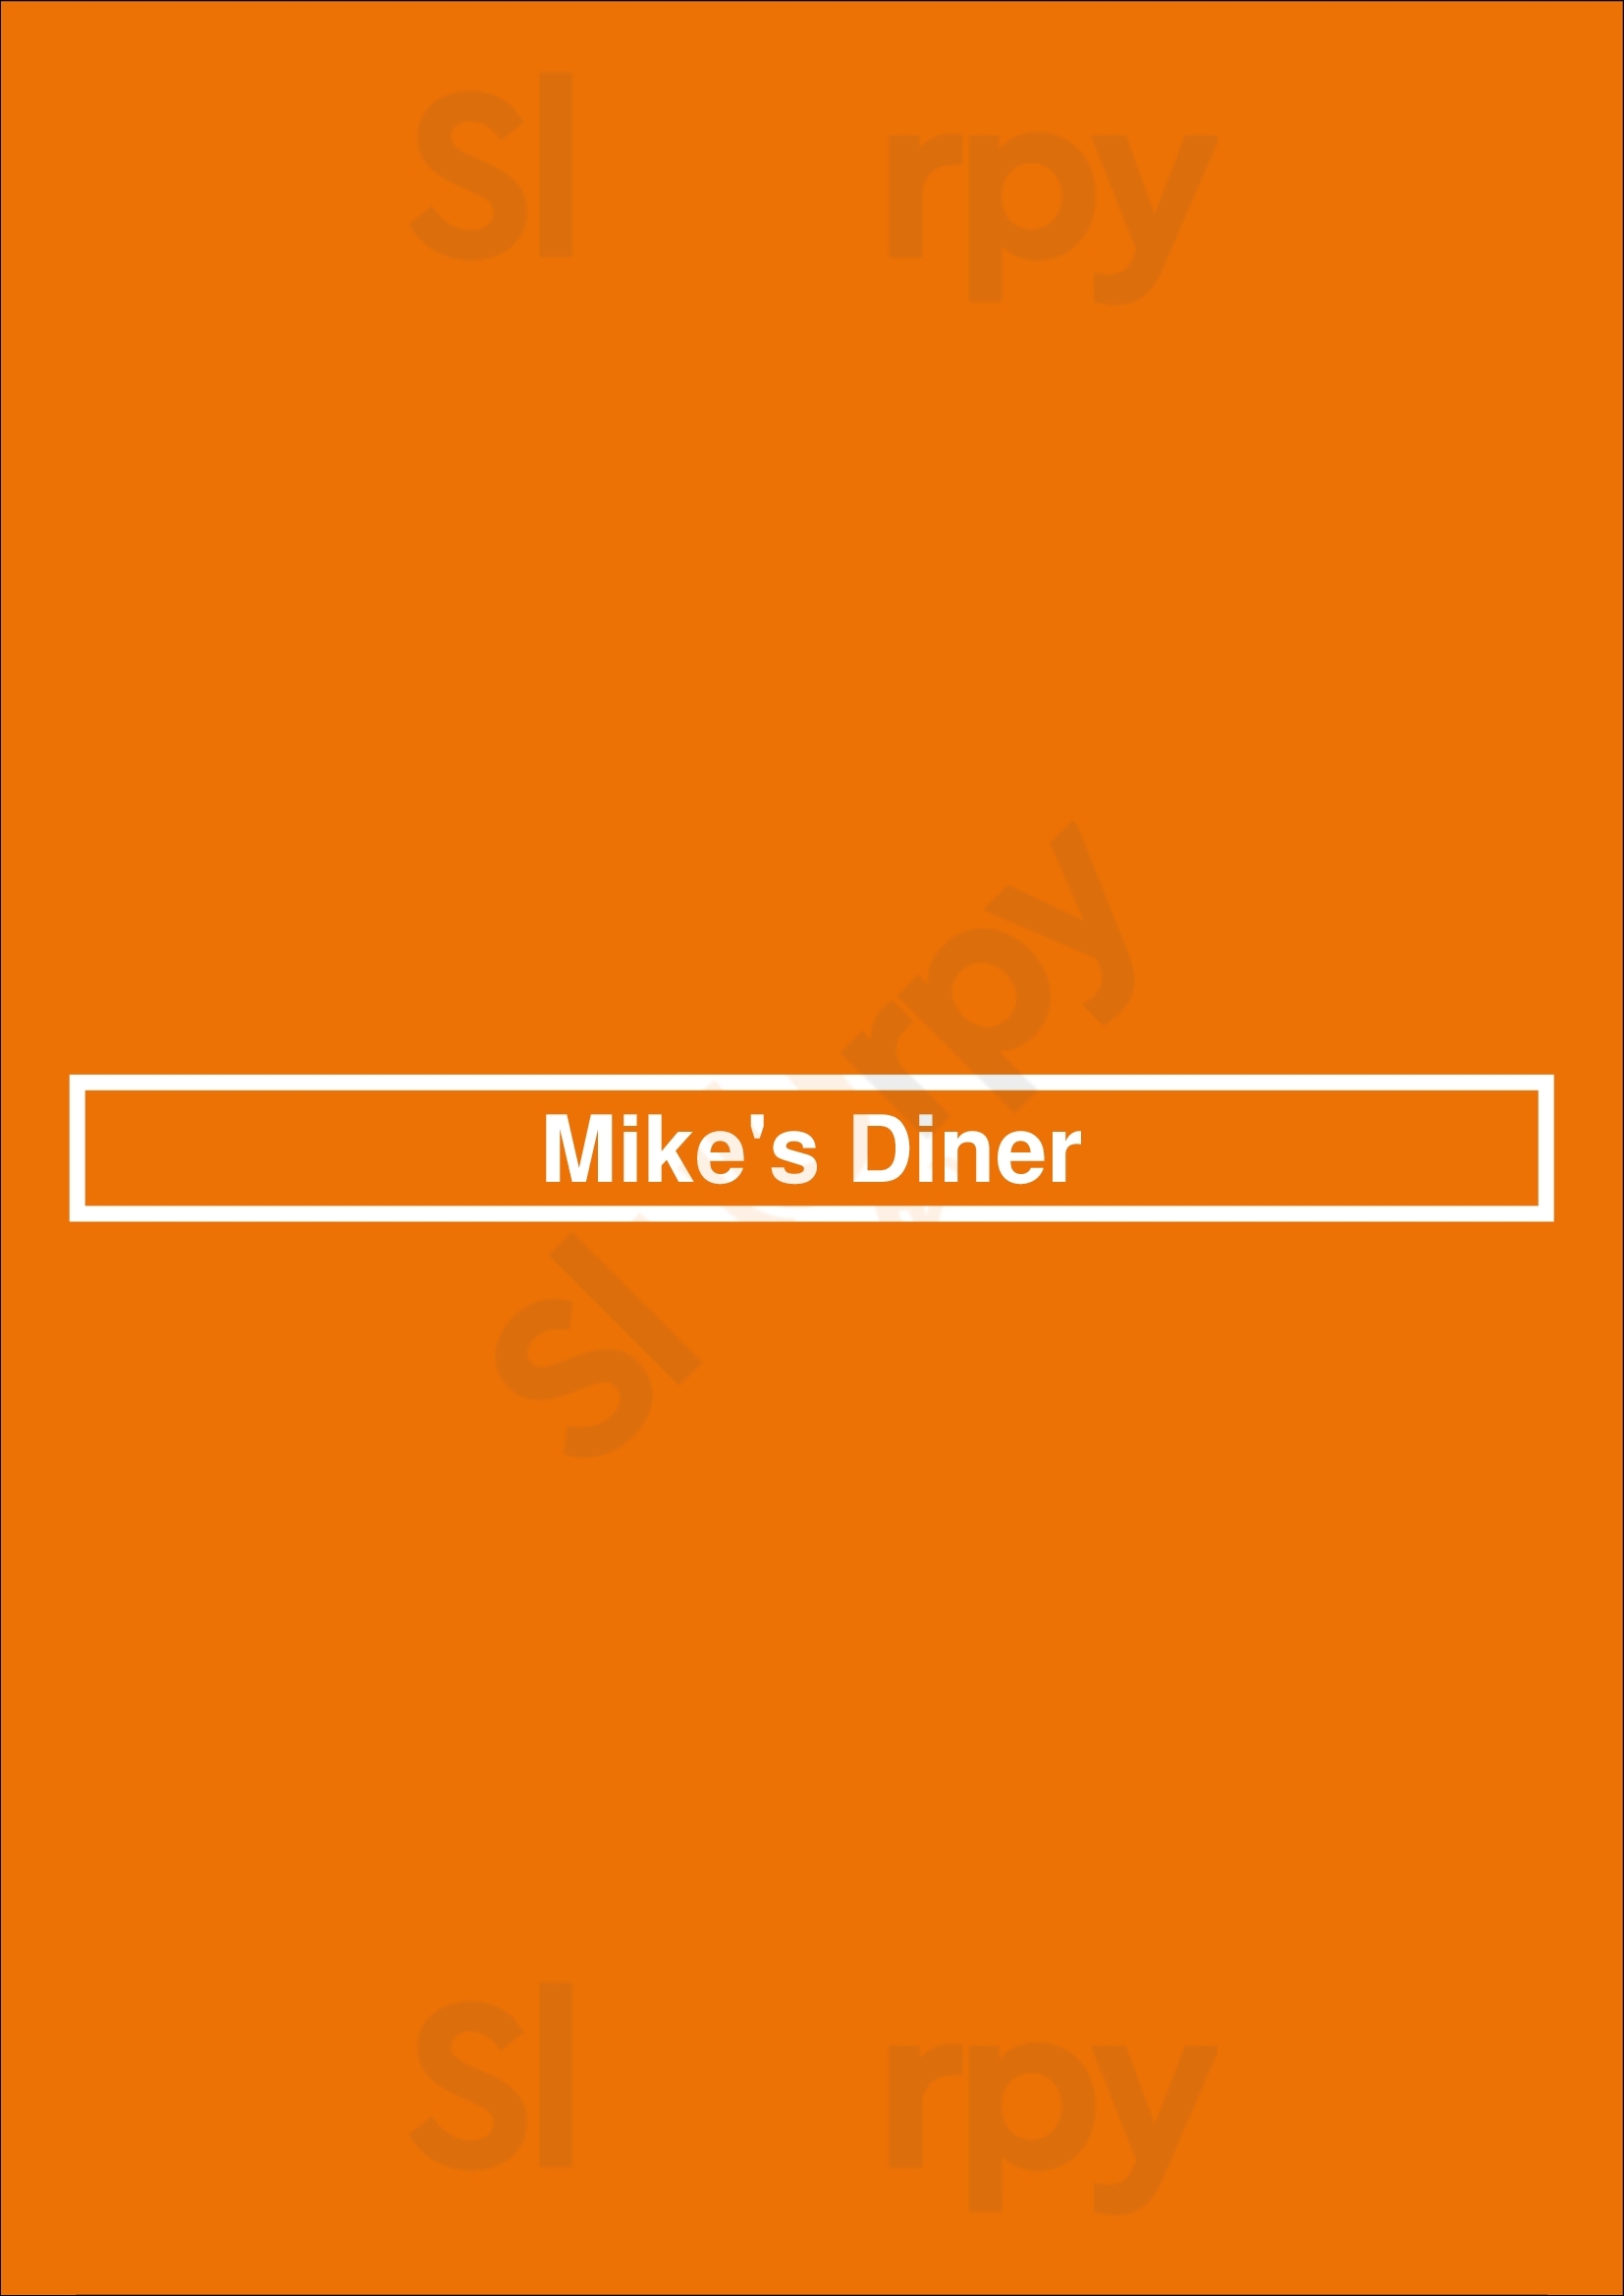 Mike's Diner Astoria Menu - 1